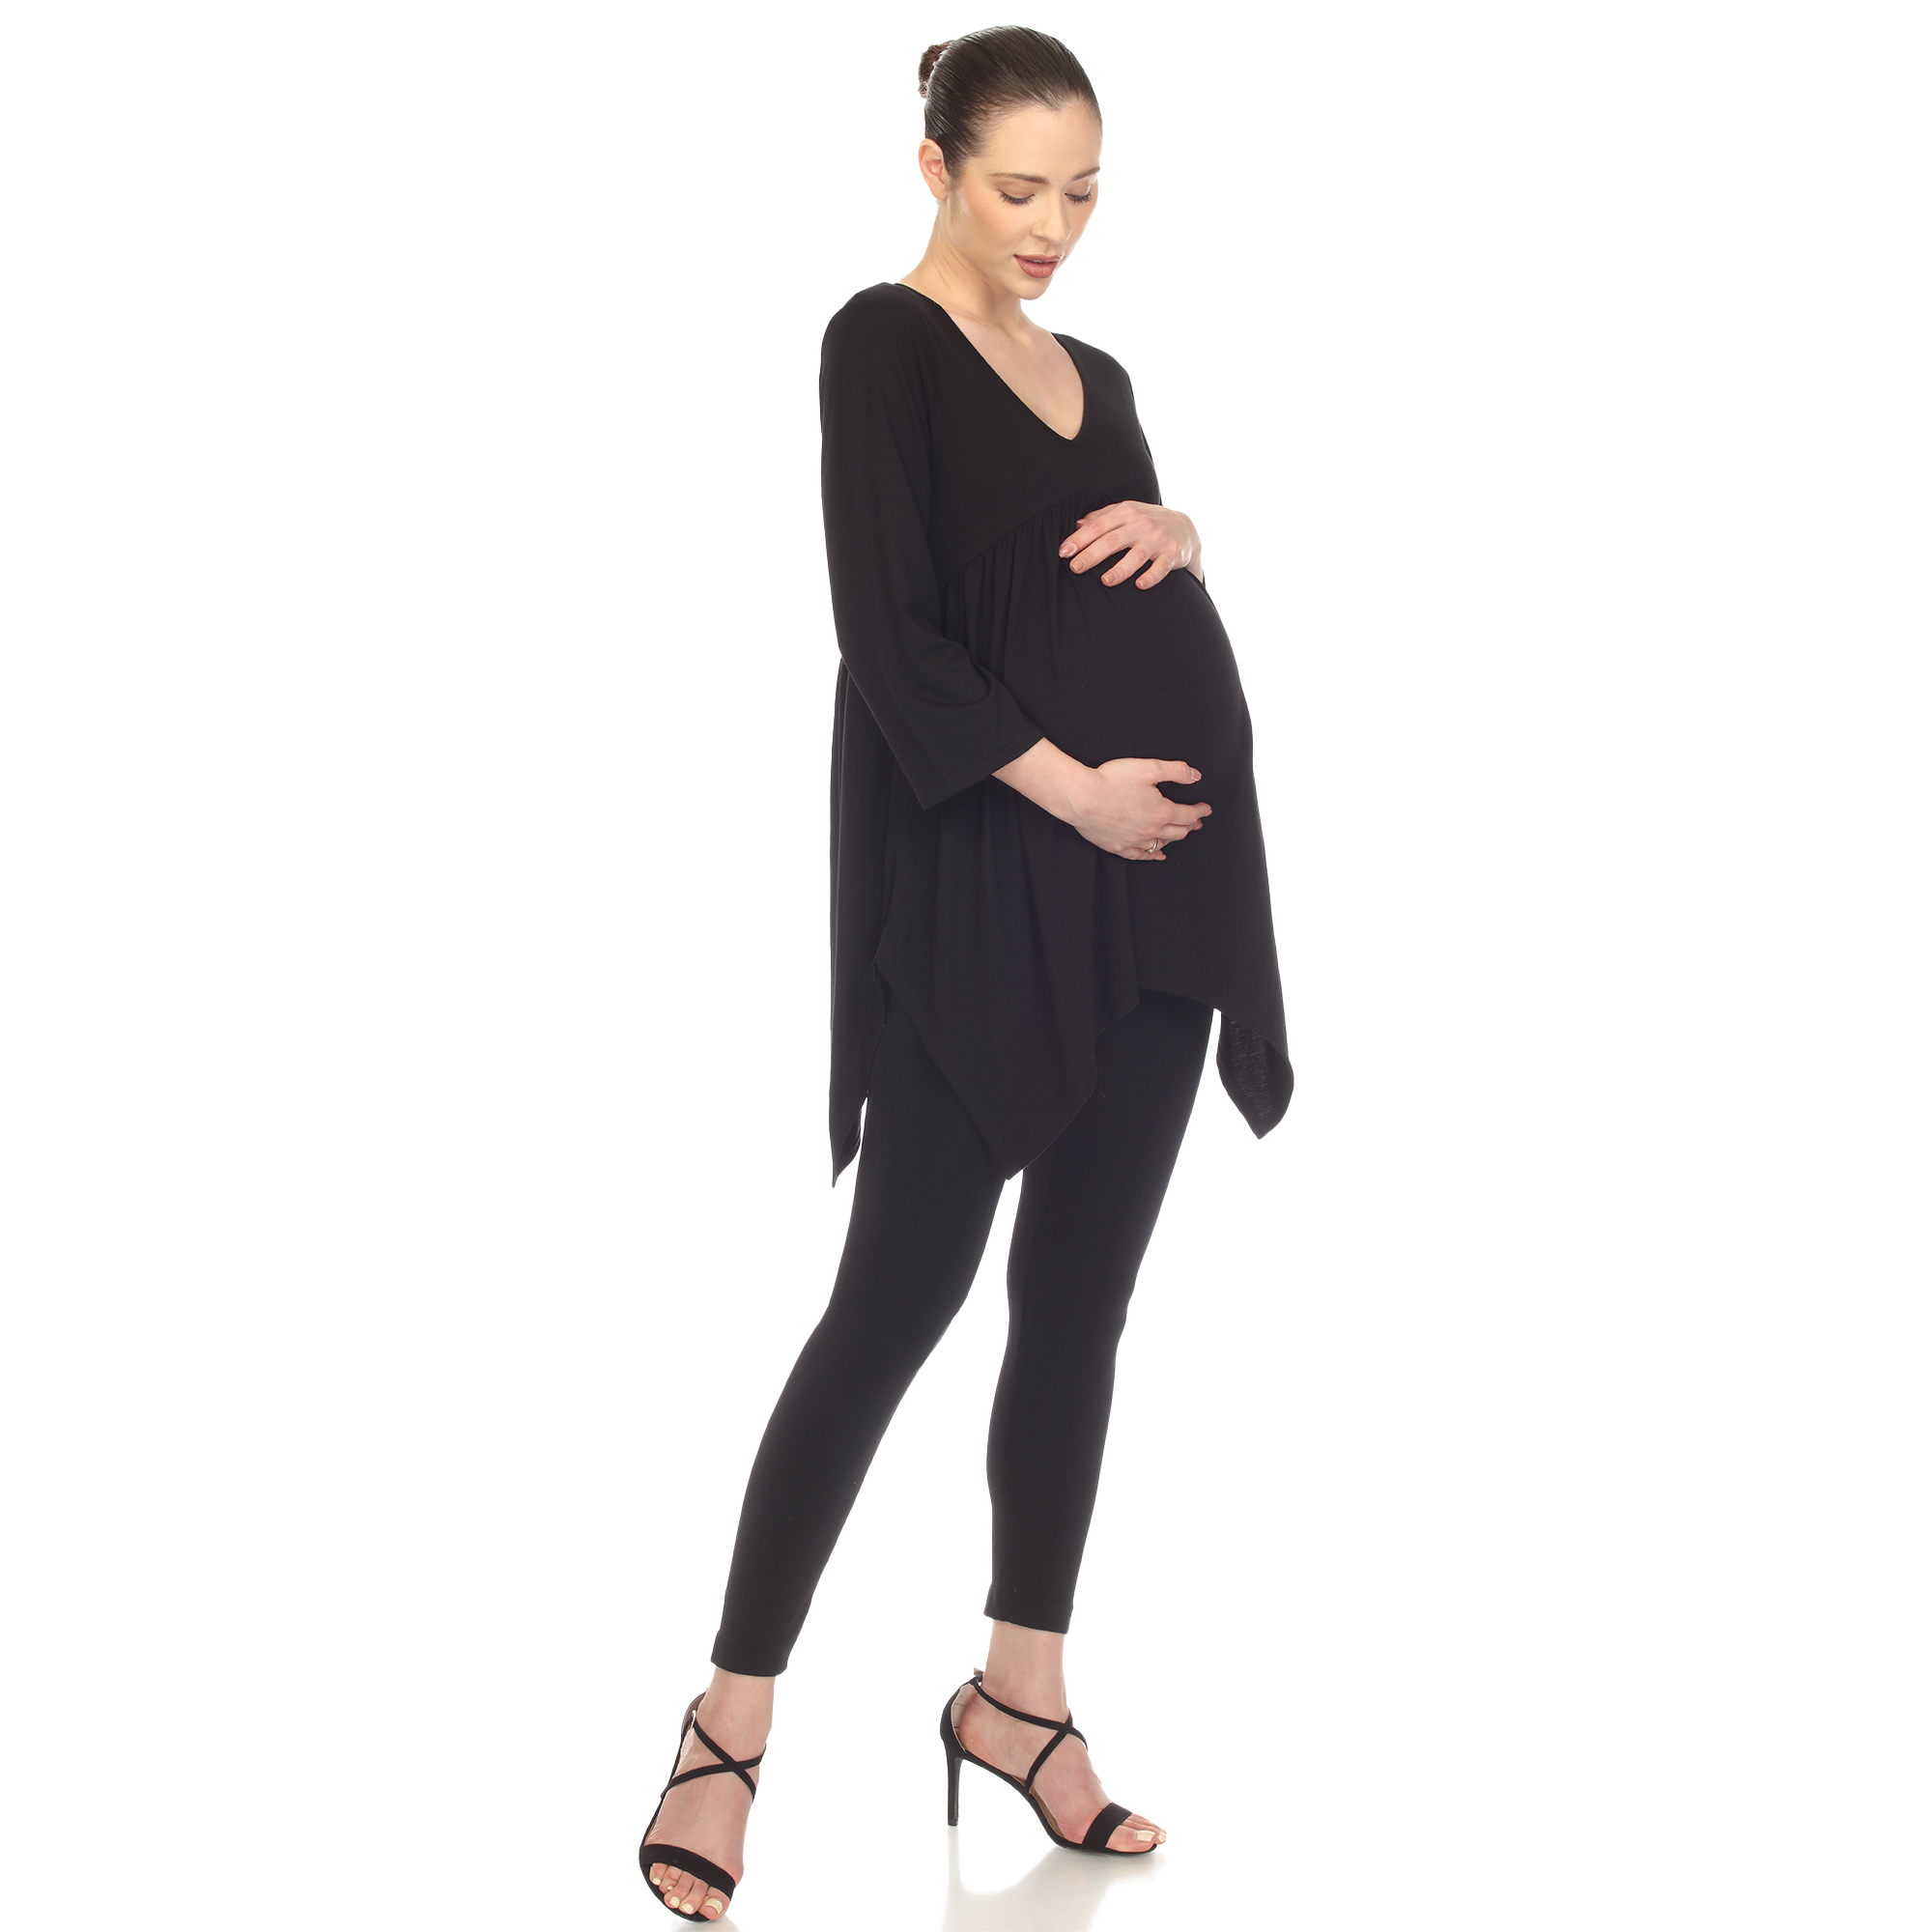 White Mark Women's Maternity Empire Waist V-Neck Tunic Top - Black, Medium